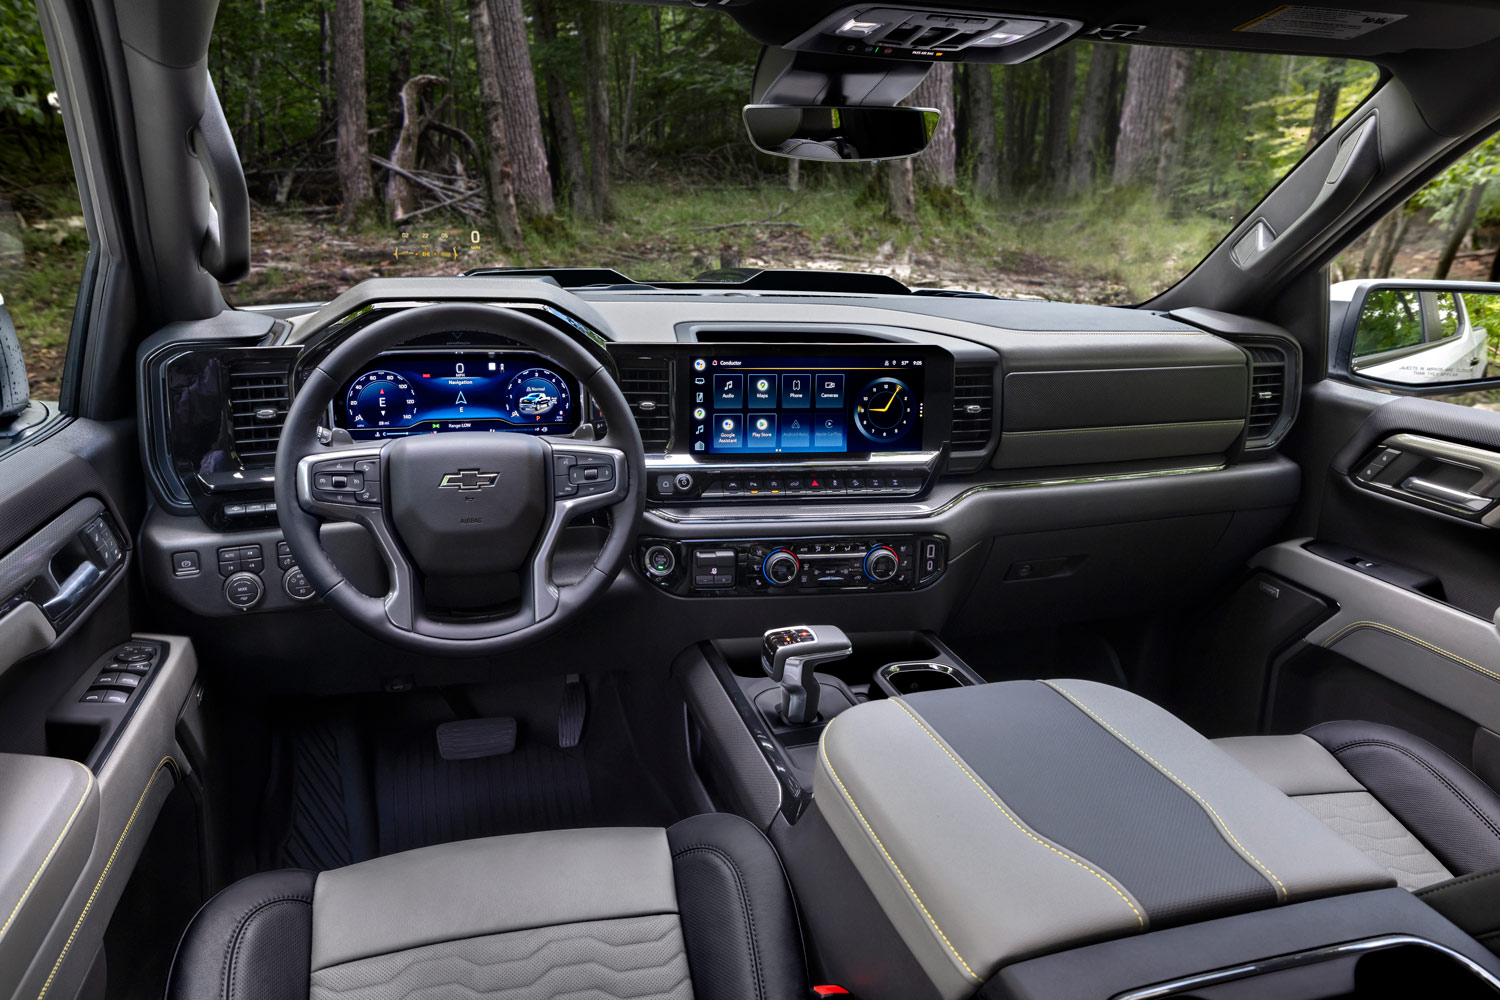 2023 Chevrolet Silverado 1500 interior and infotainment system